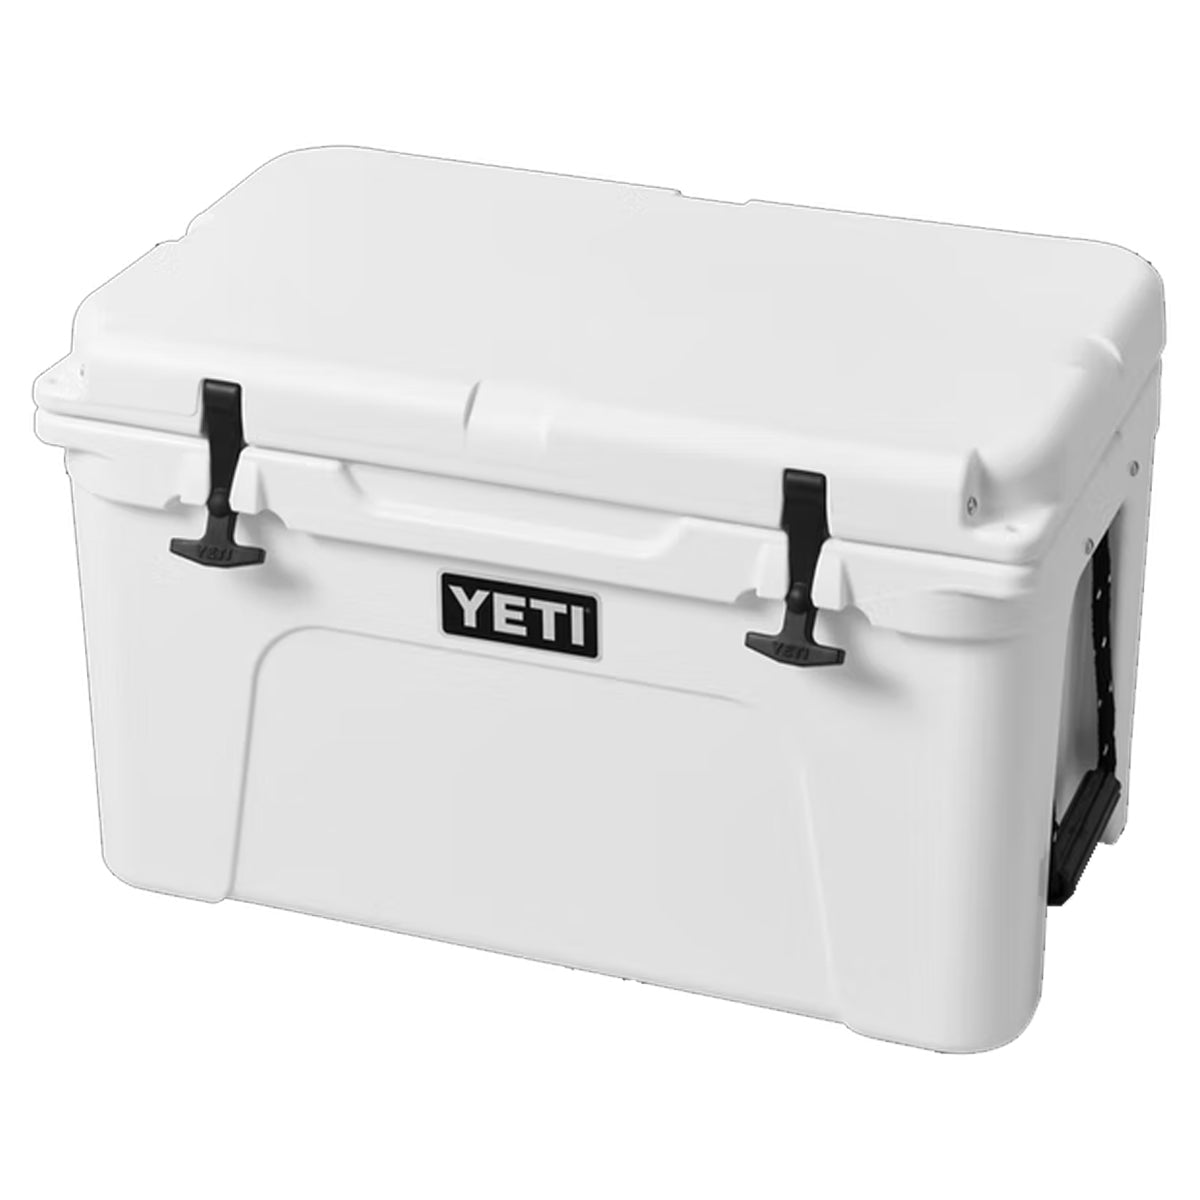 YETI Tundra 45 Insulated Chest Cooler, White at